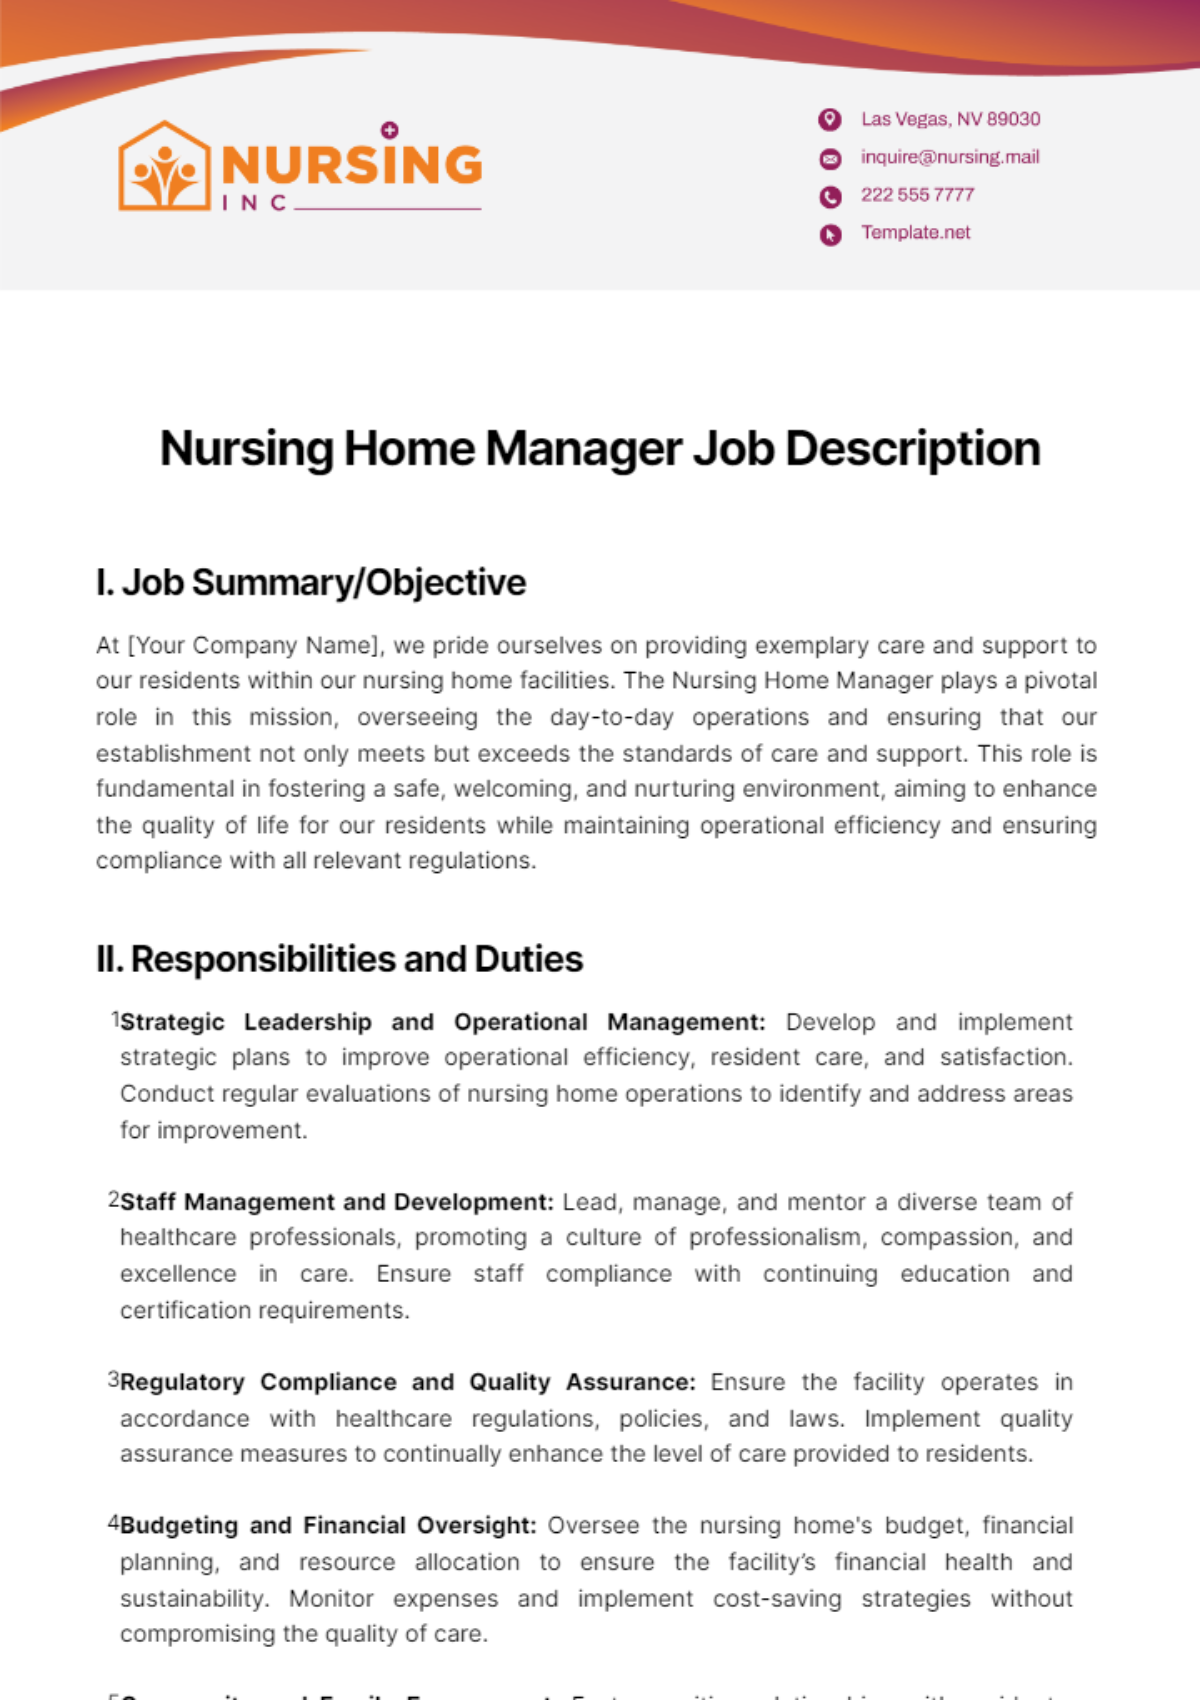 Nursing Home Manager Job Description Template